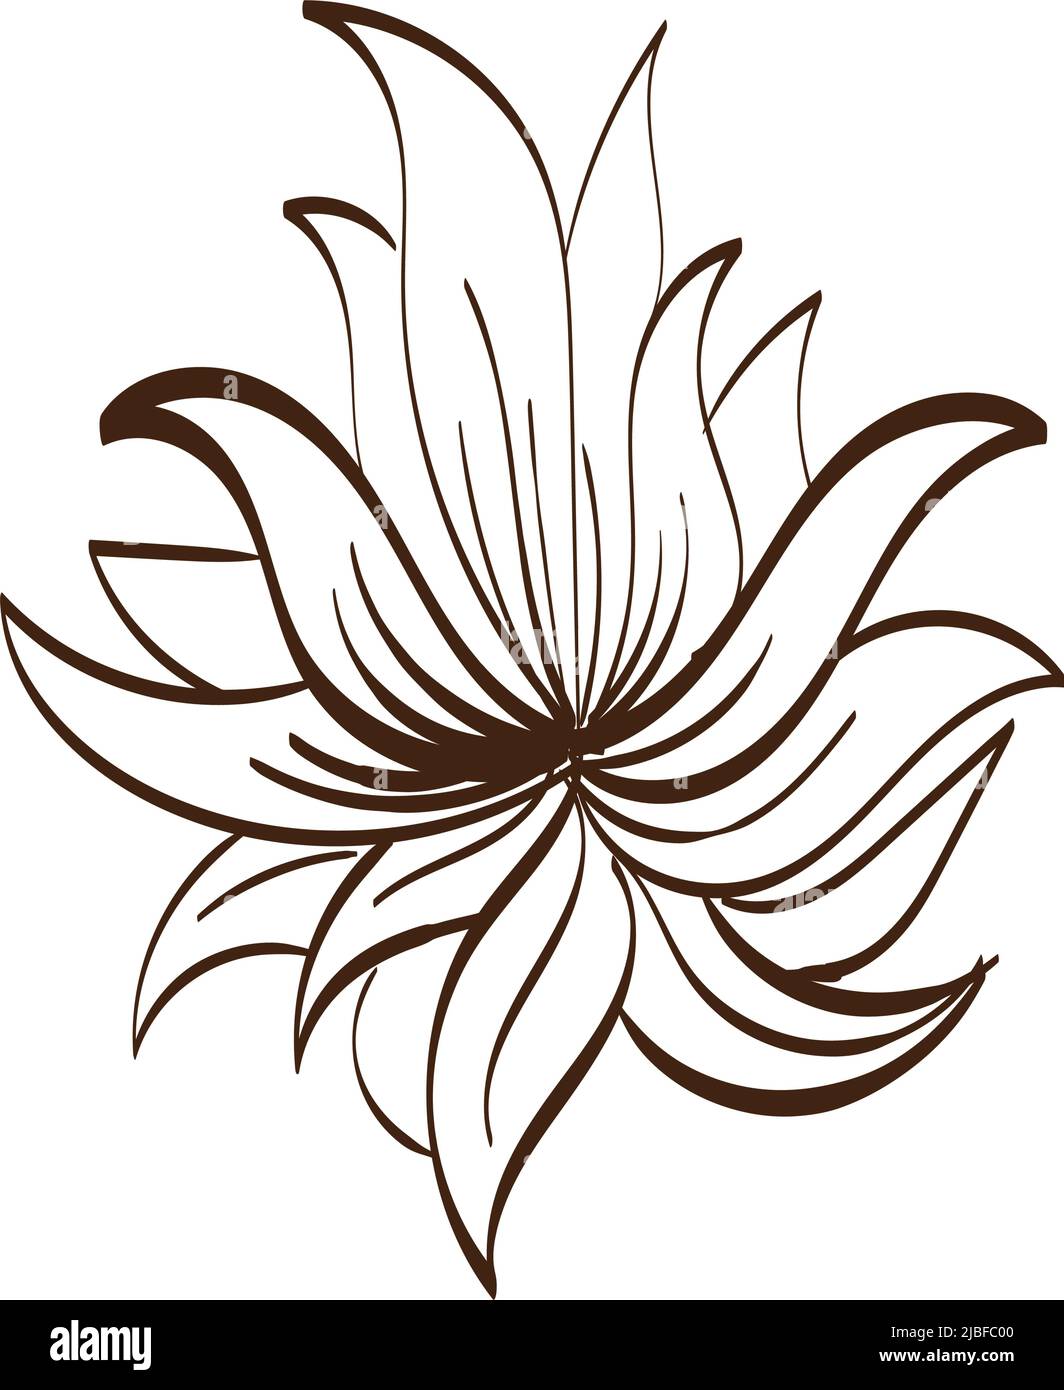 Flower Vector Art. Flower Art Drawing. Flower Embroidery design ...